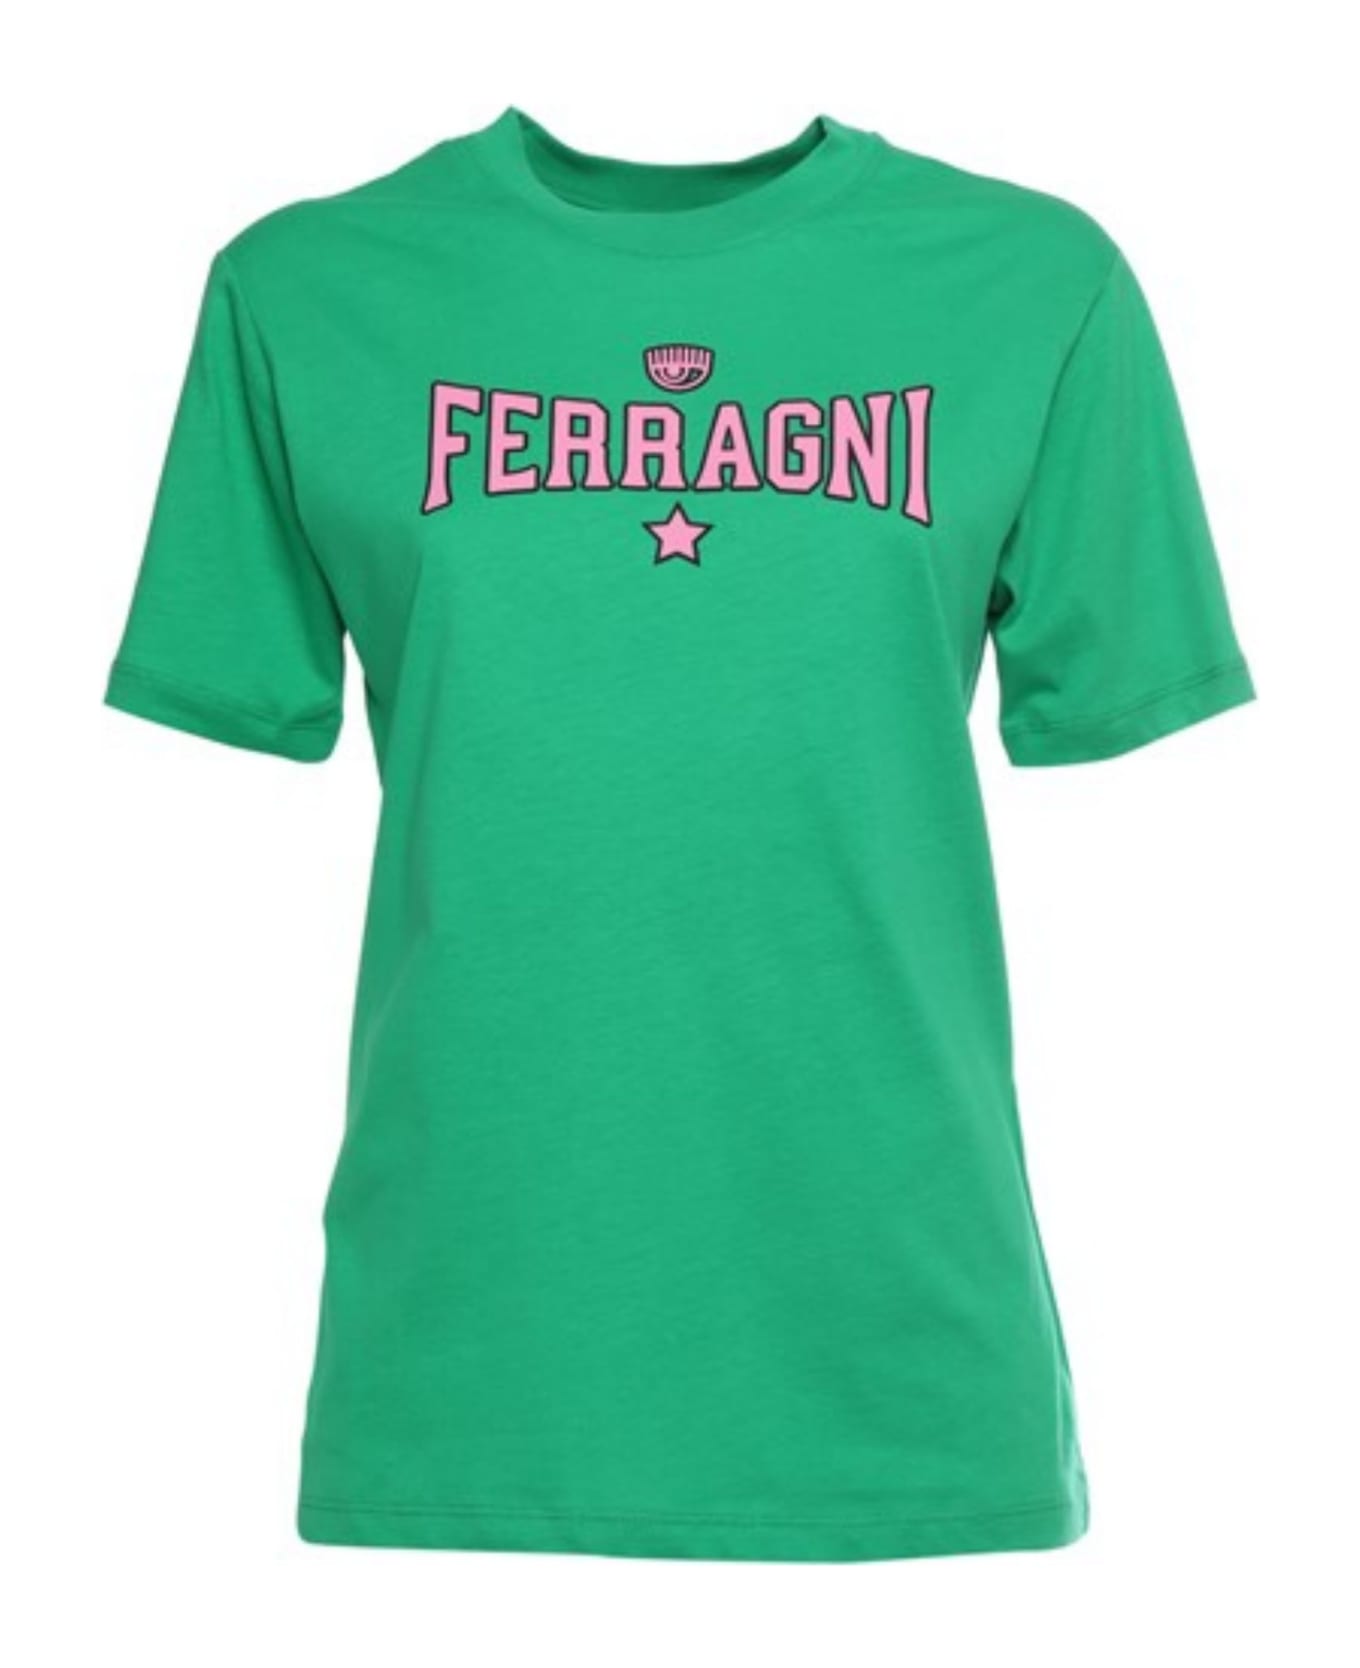 Chiara Ferragni T-shirts And Polos Green - Green